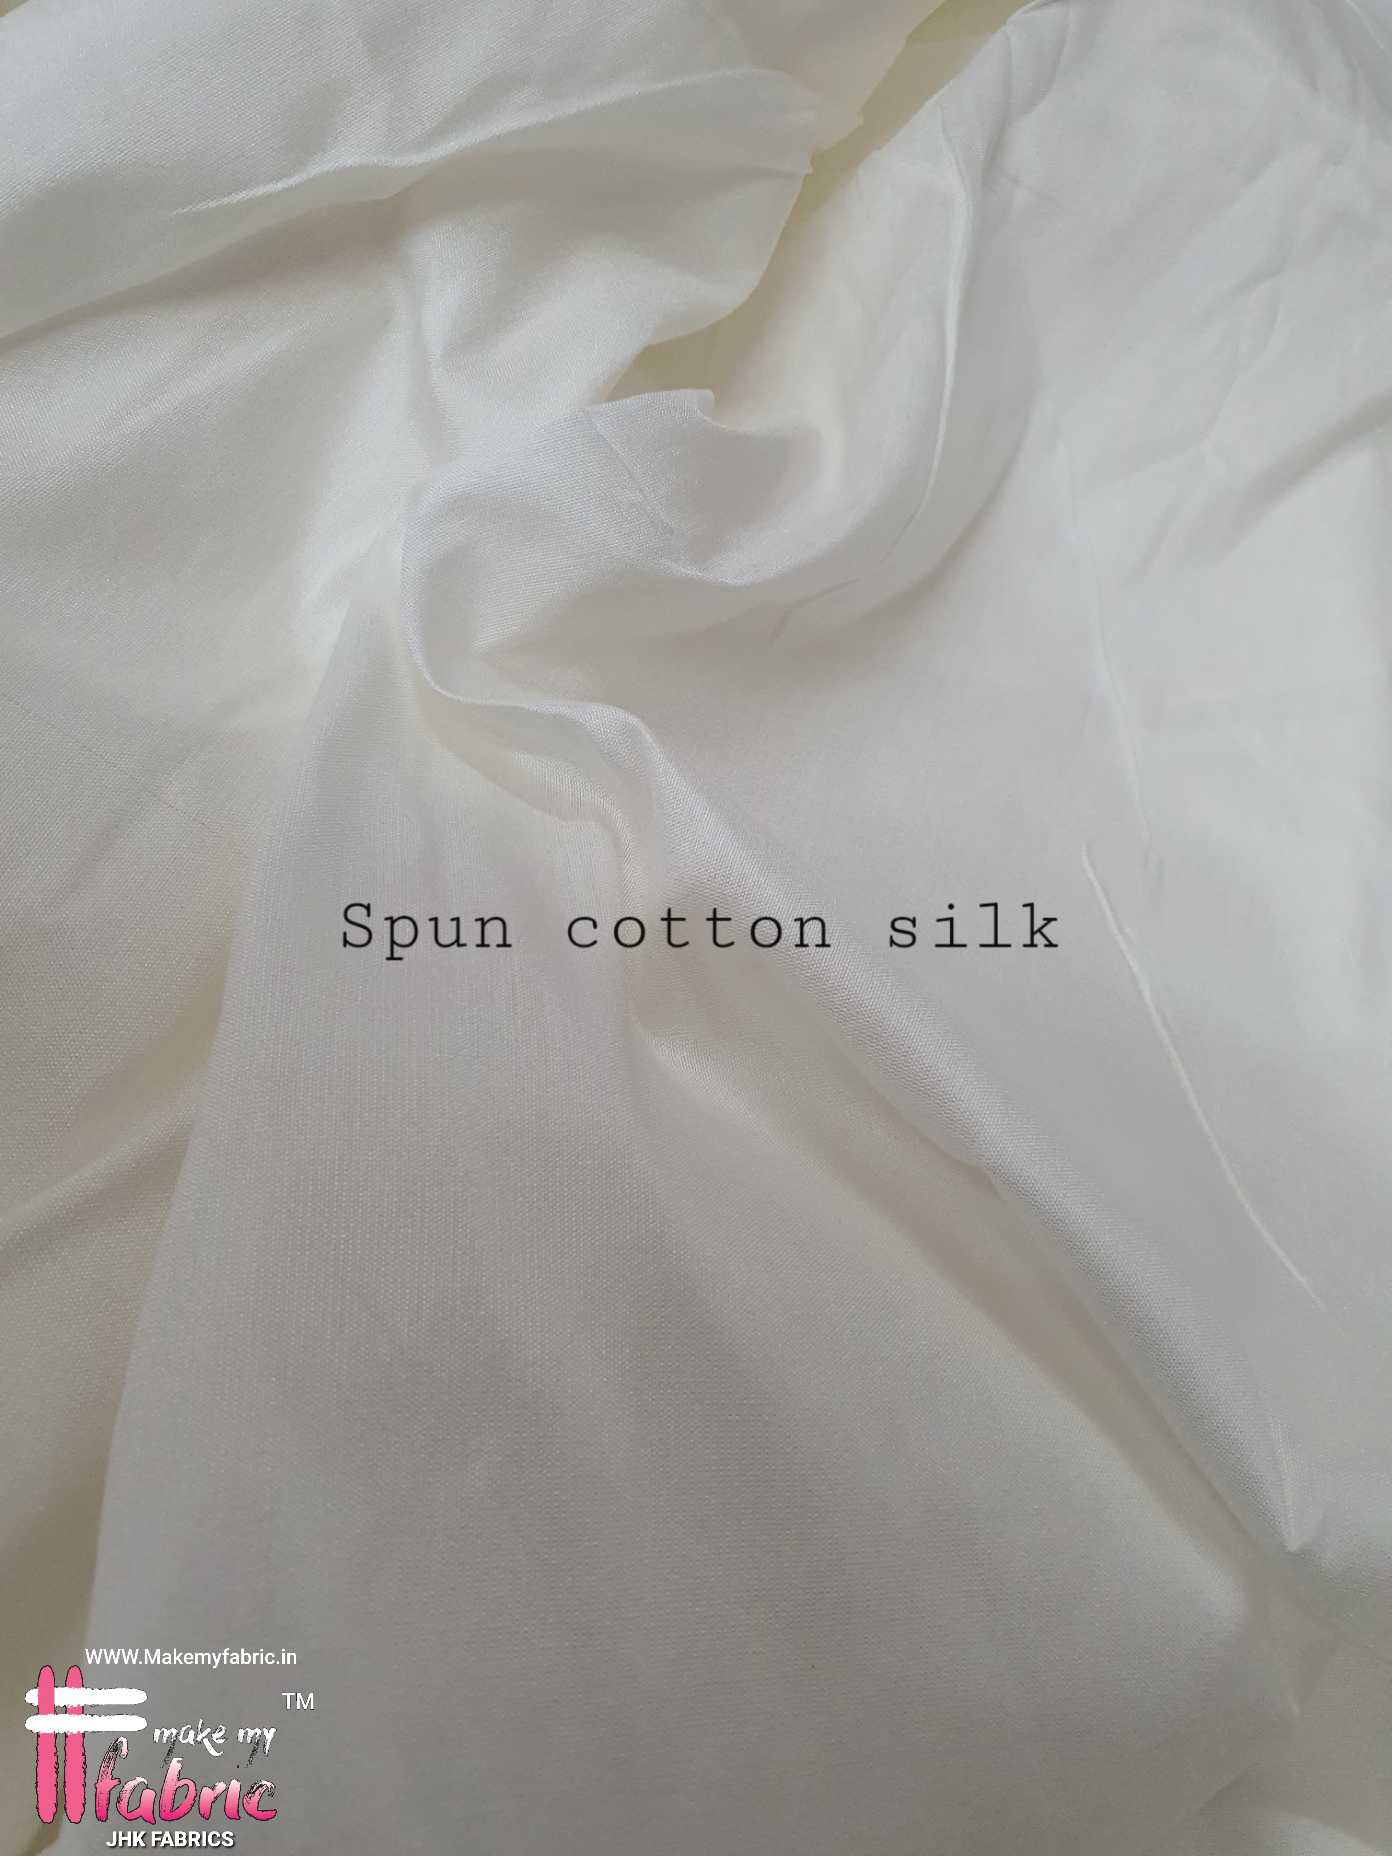 Spun cotton silk